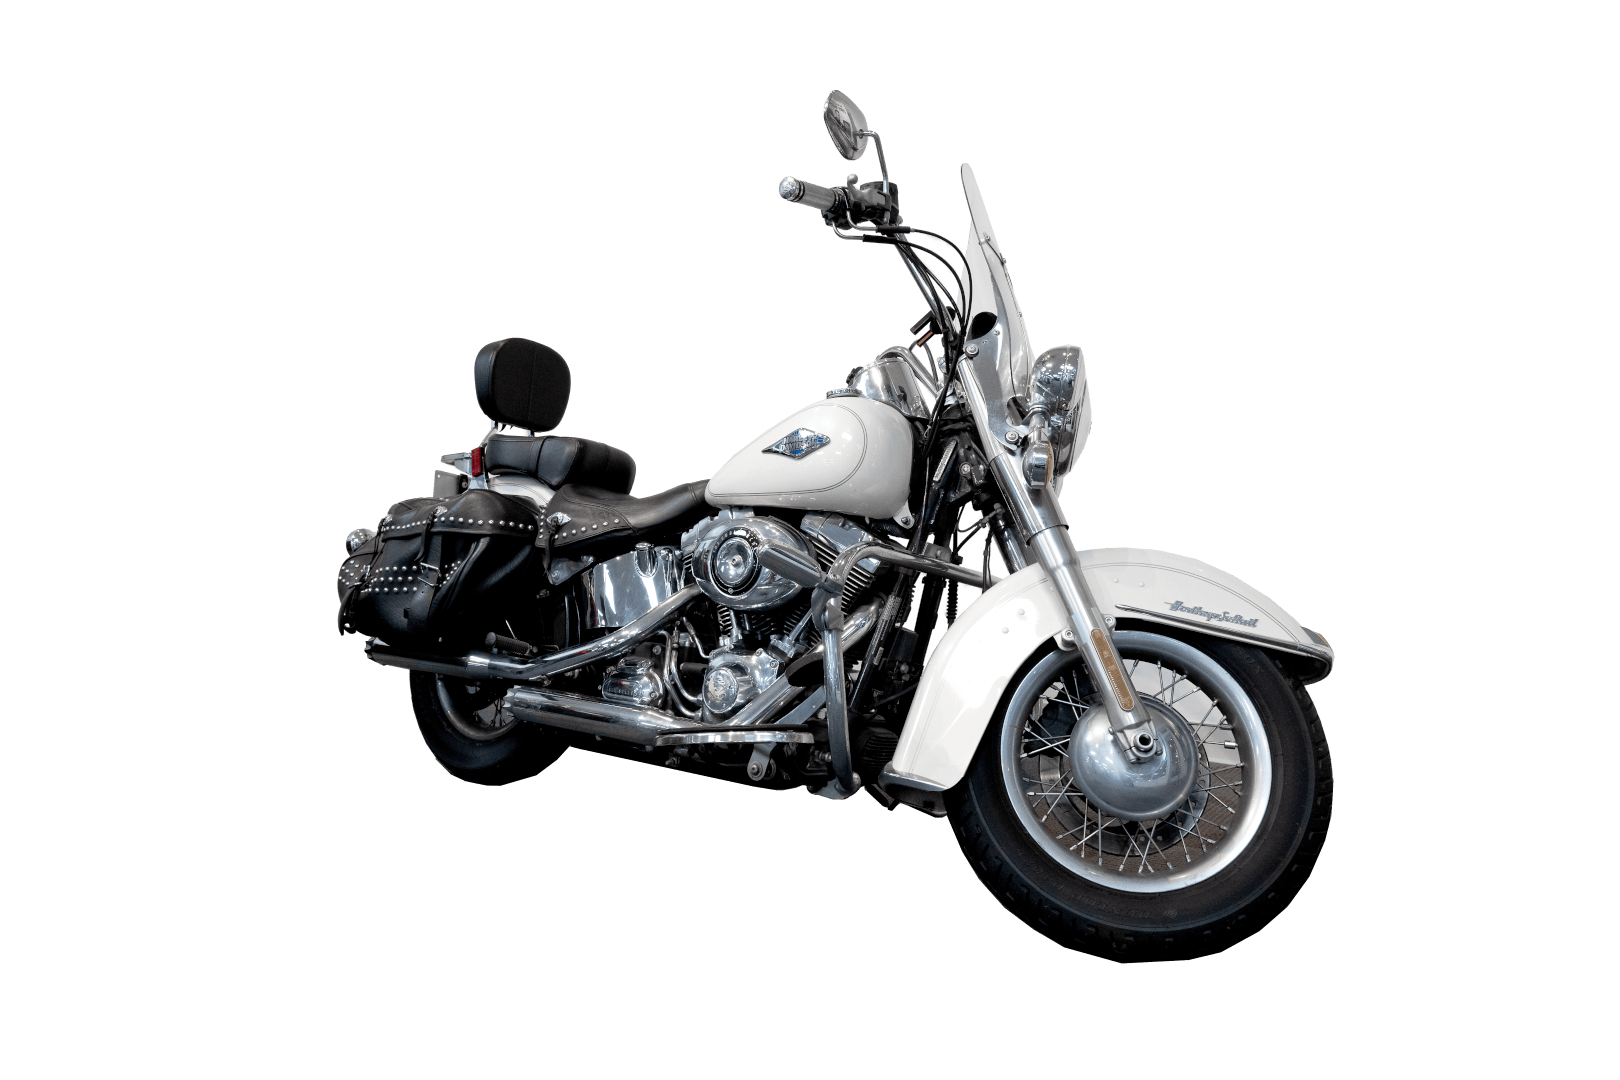 Rick Joyner's Harley Davidson